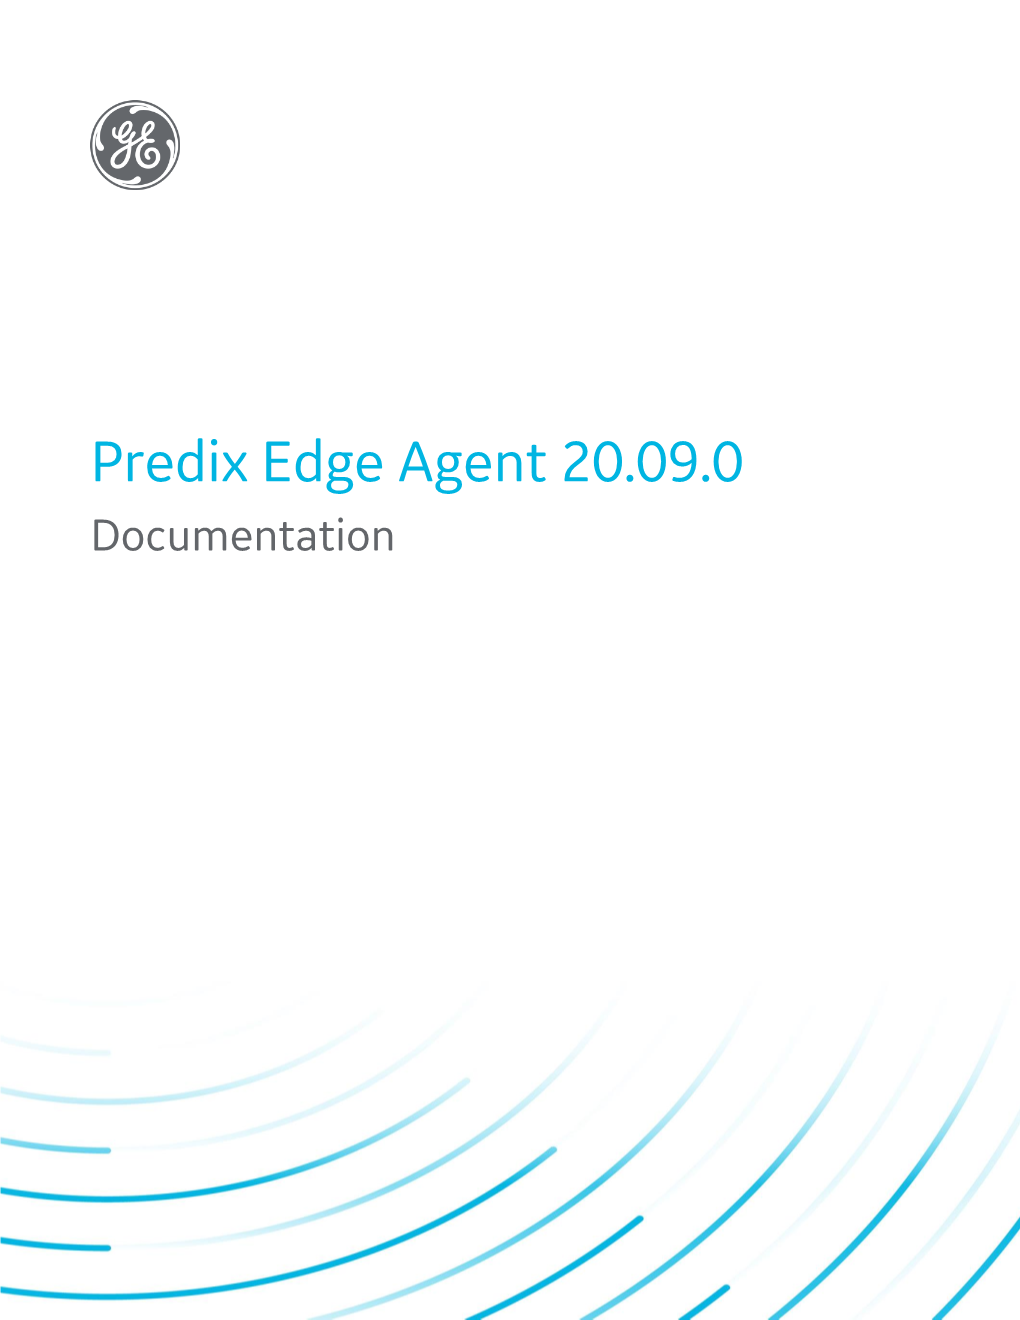 Predix Edge Agent 20.09.0 Documentation